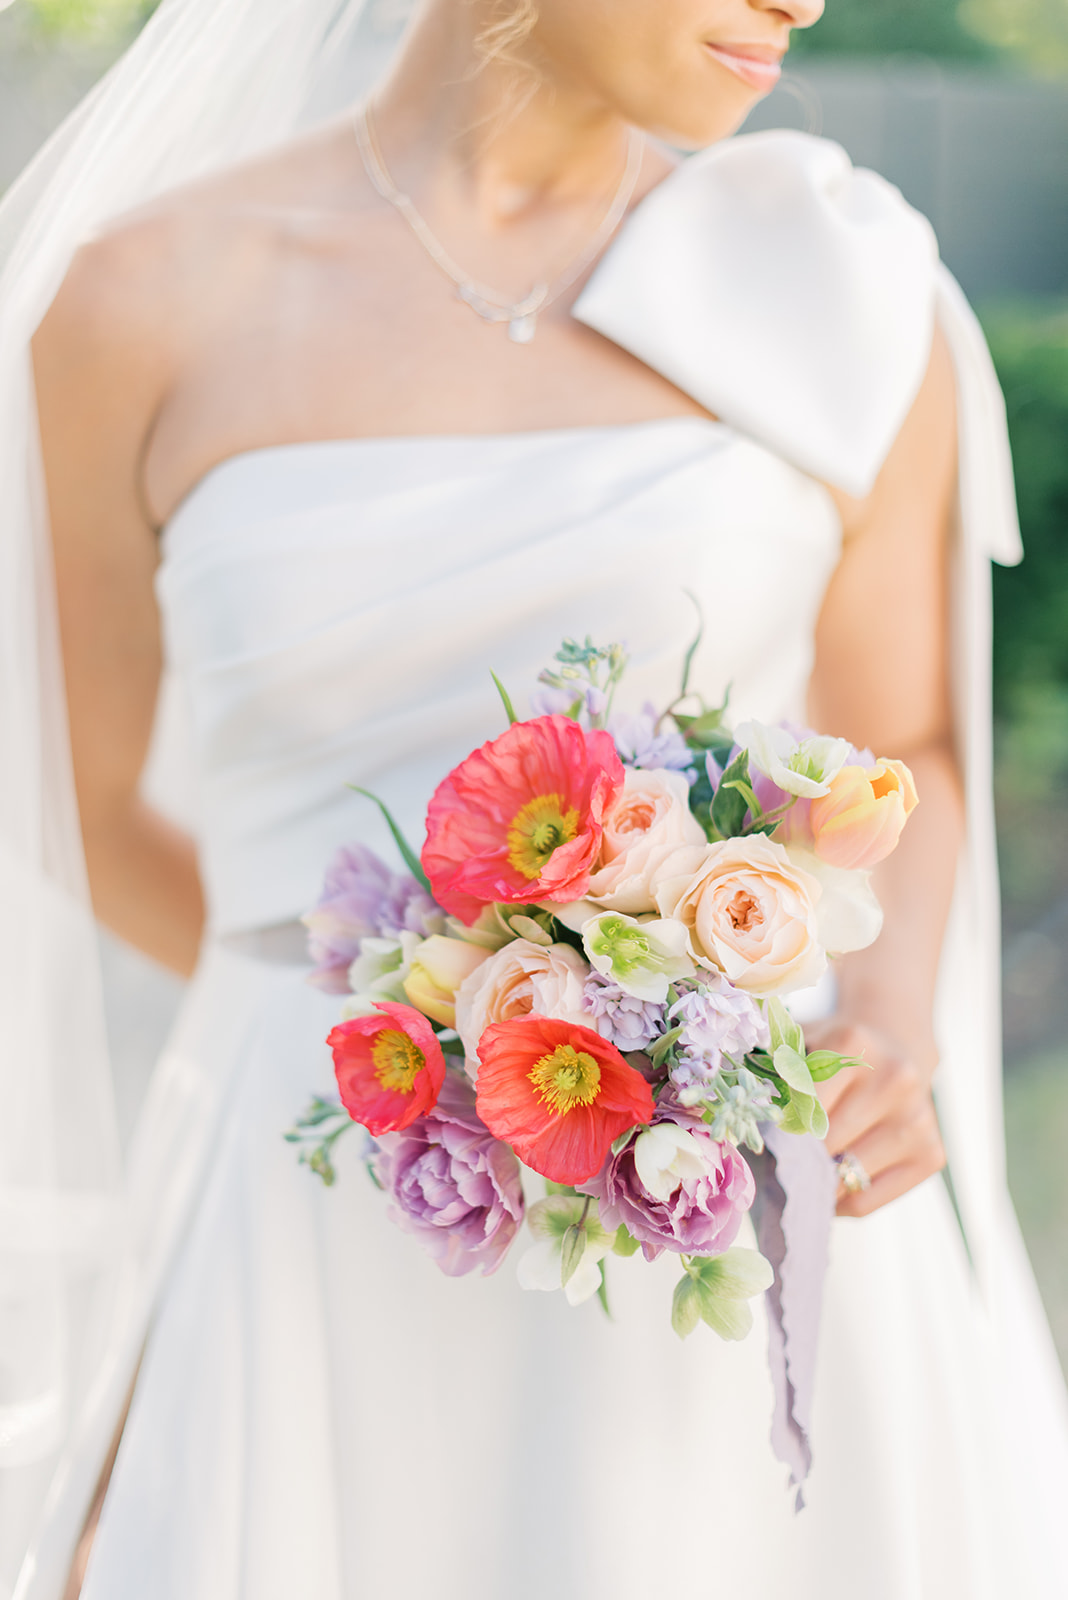 citrus-inspired wedding bouquet